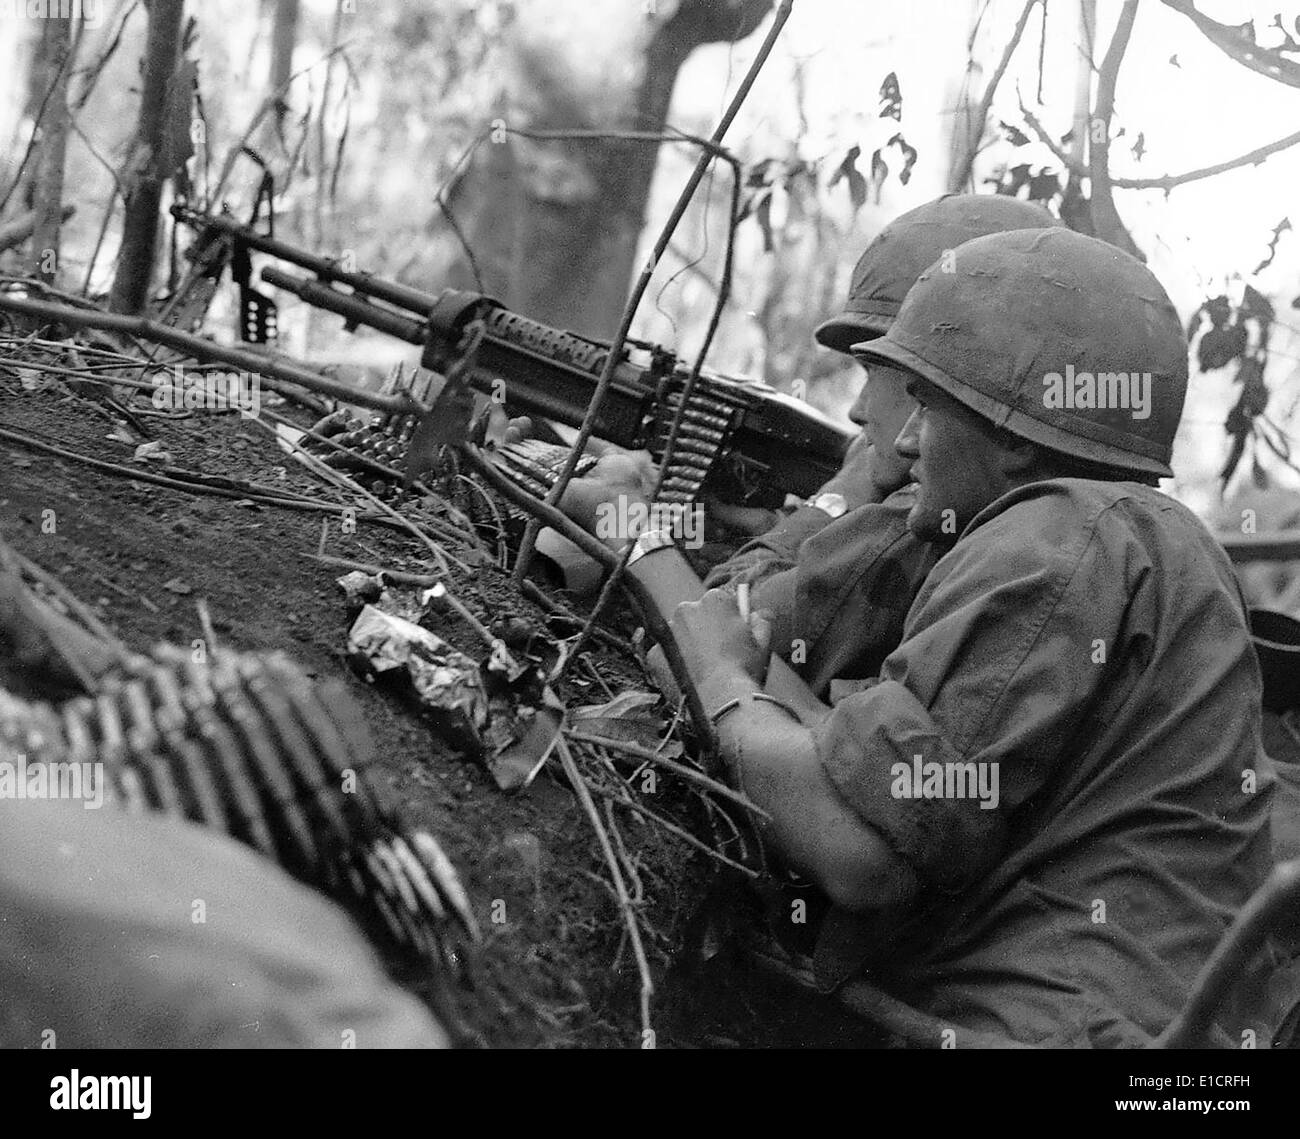 Vietnam War. Soldiers Laying Down Covering Fire with an M-60 machine gun - Vietnam 1966 Stock Photo